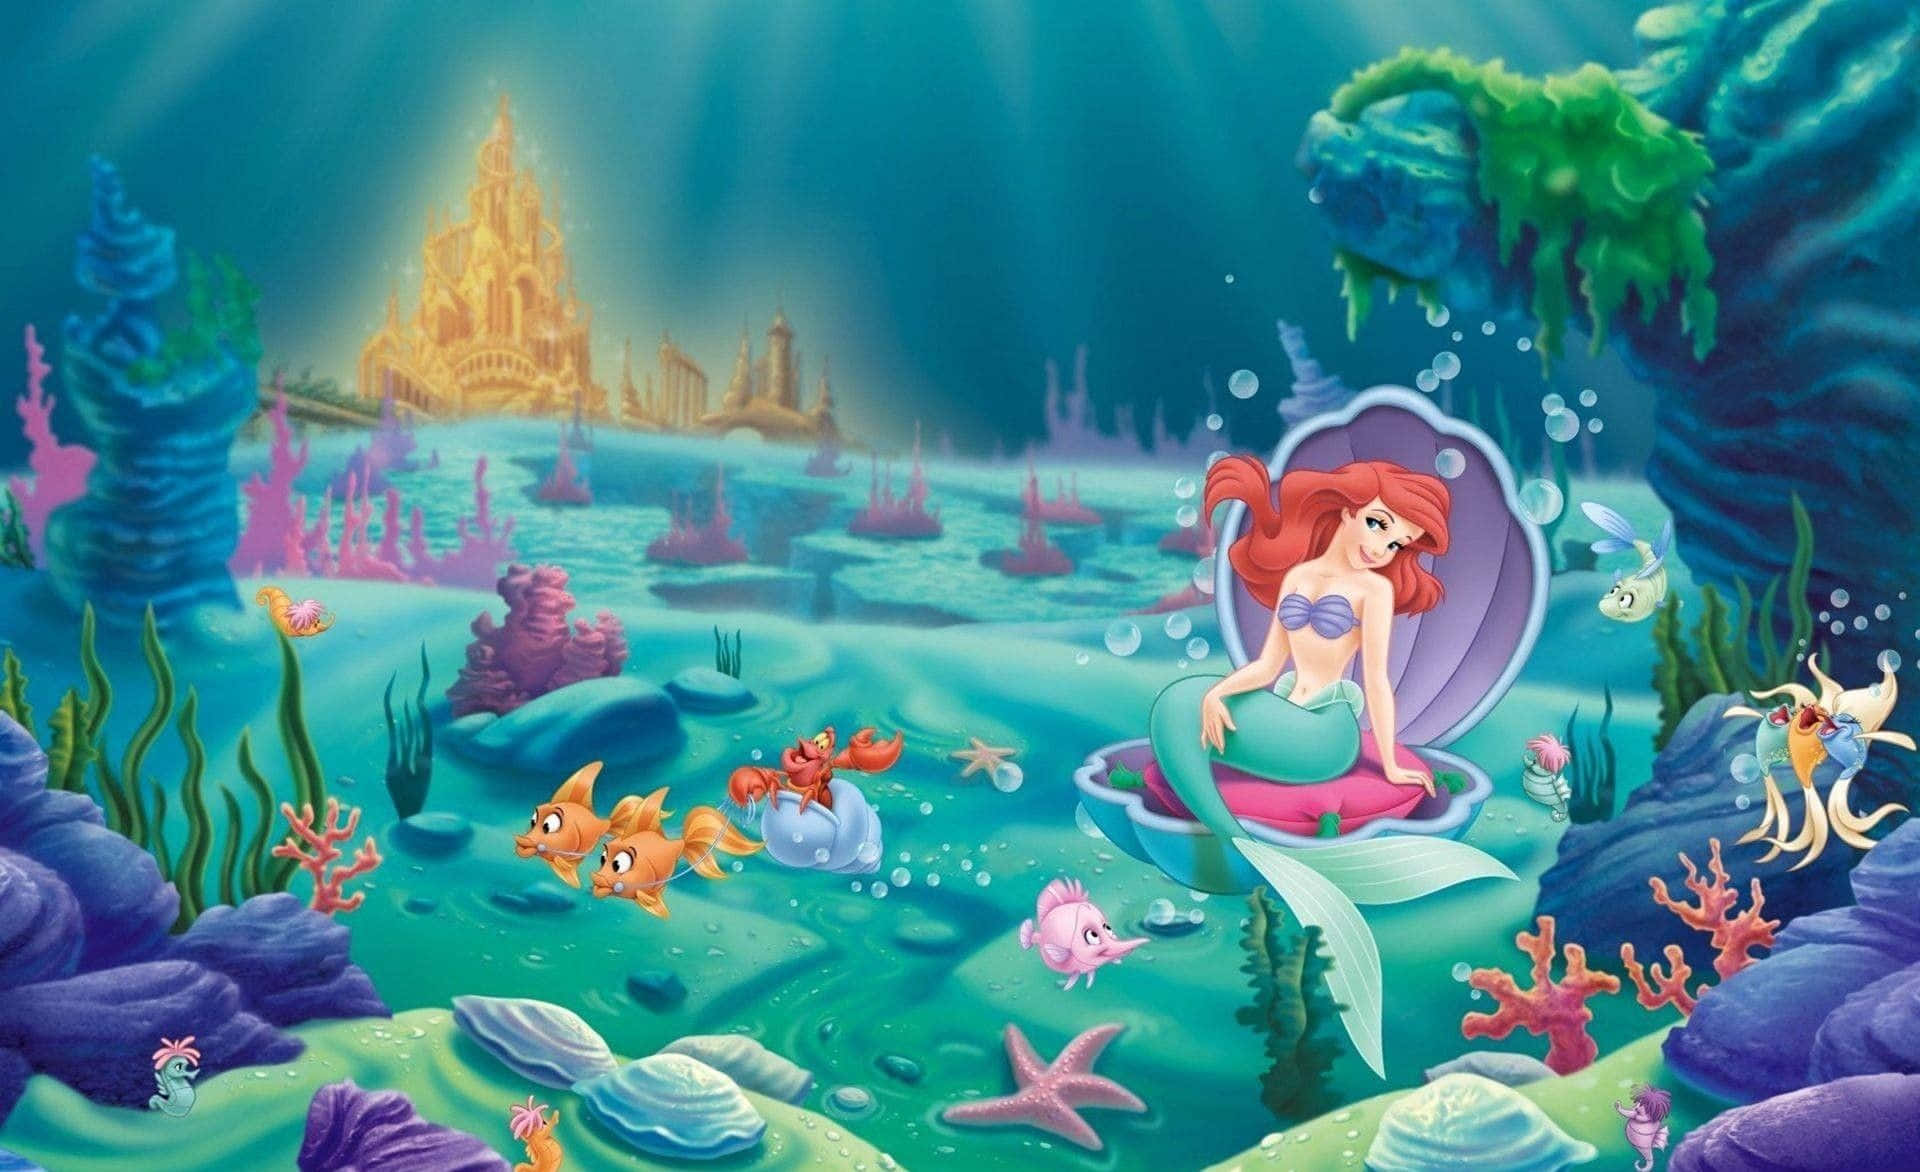 Explore the magical kingdom of Atlantica with Ariel